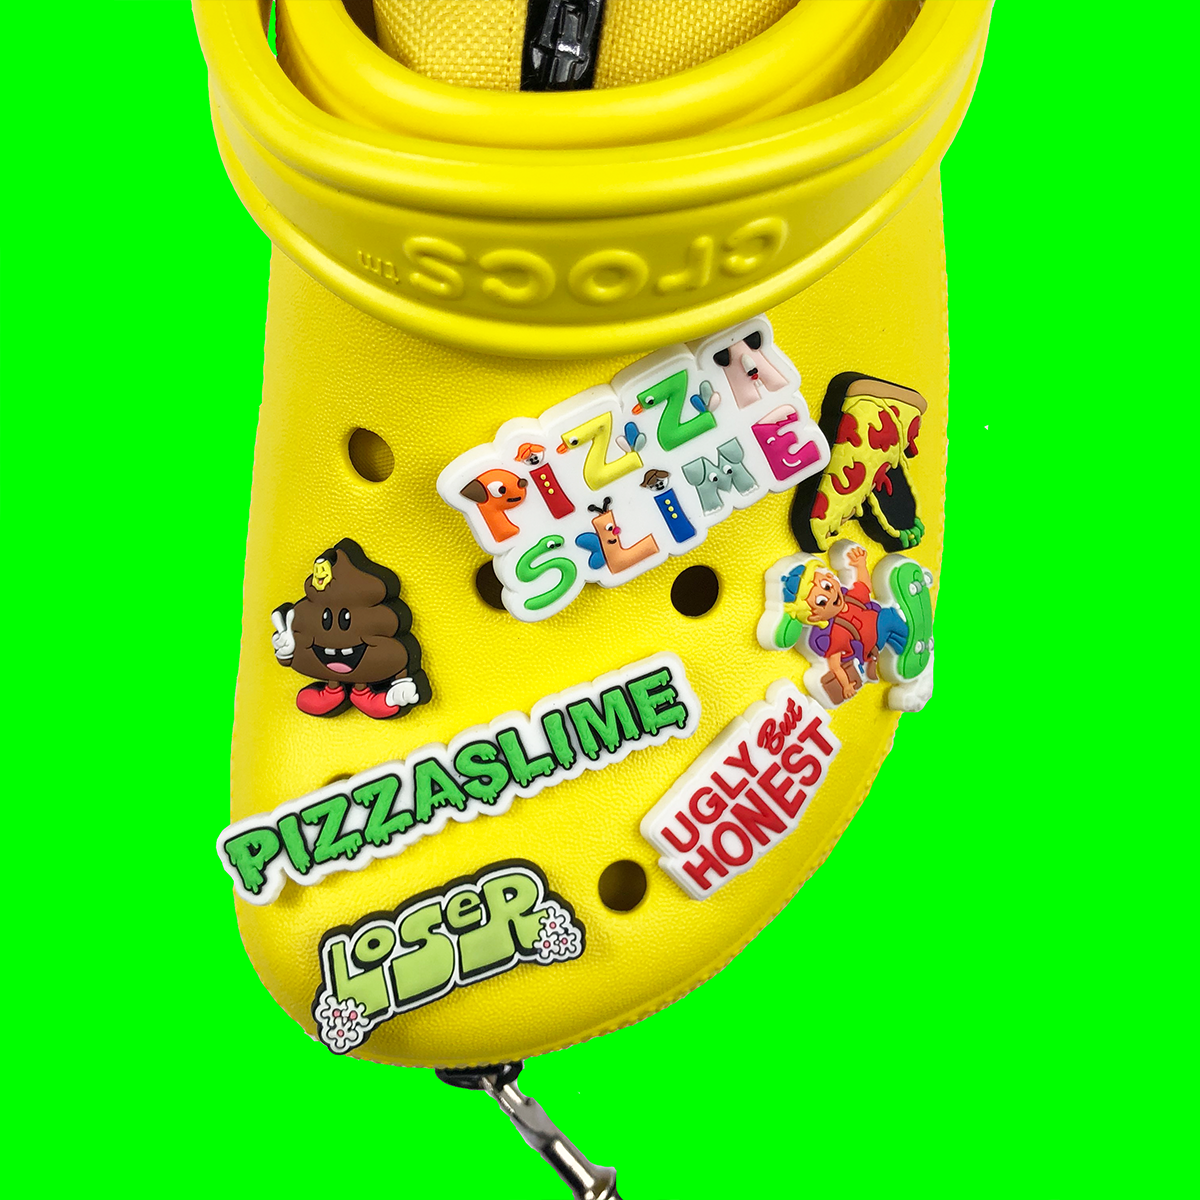 Pizzaslime x Crocs - Yellow Bag